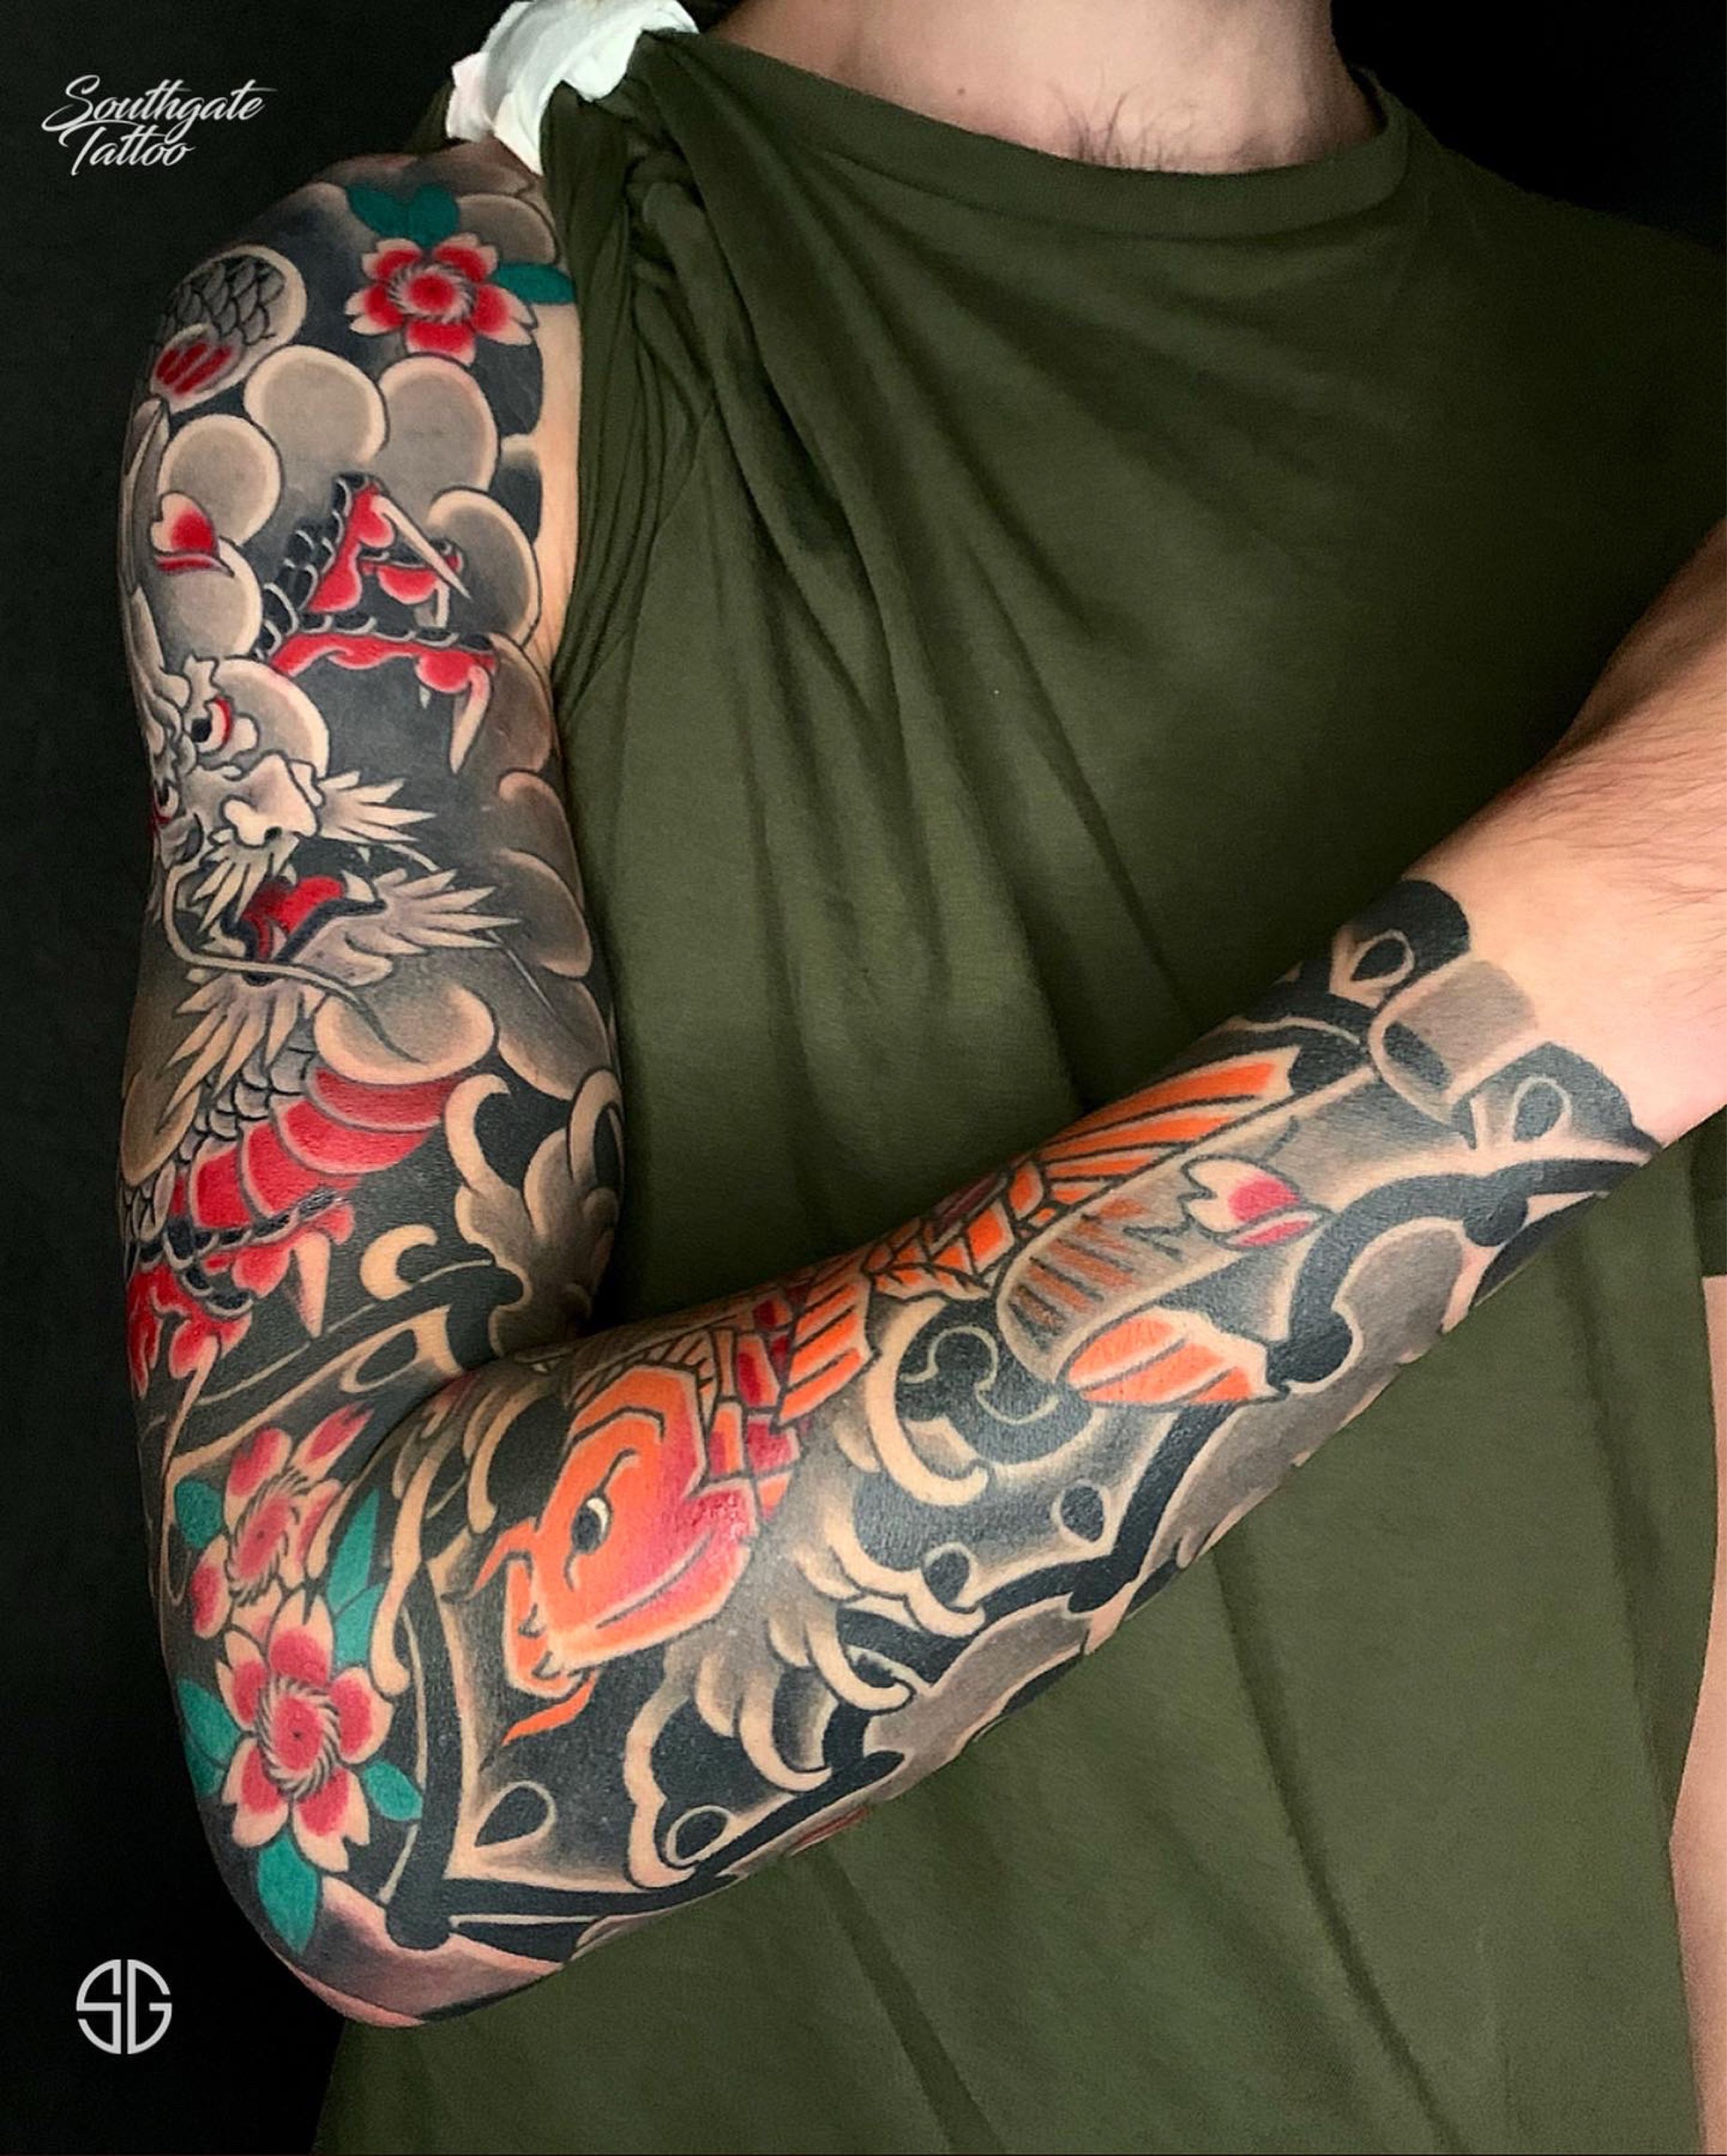 Full Back Covered Koi Fish Body Tattoo Sticker Demon Samurai 1PCS | eBay